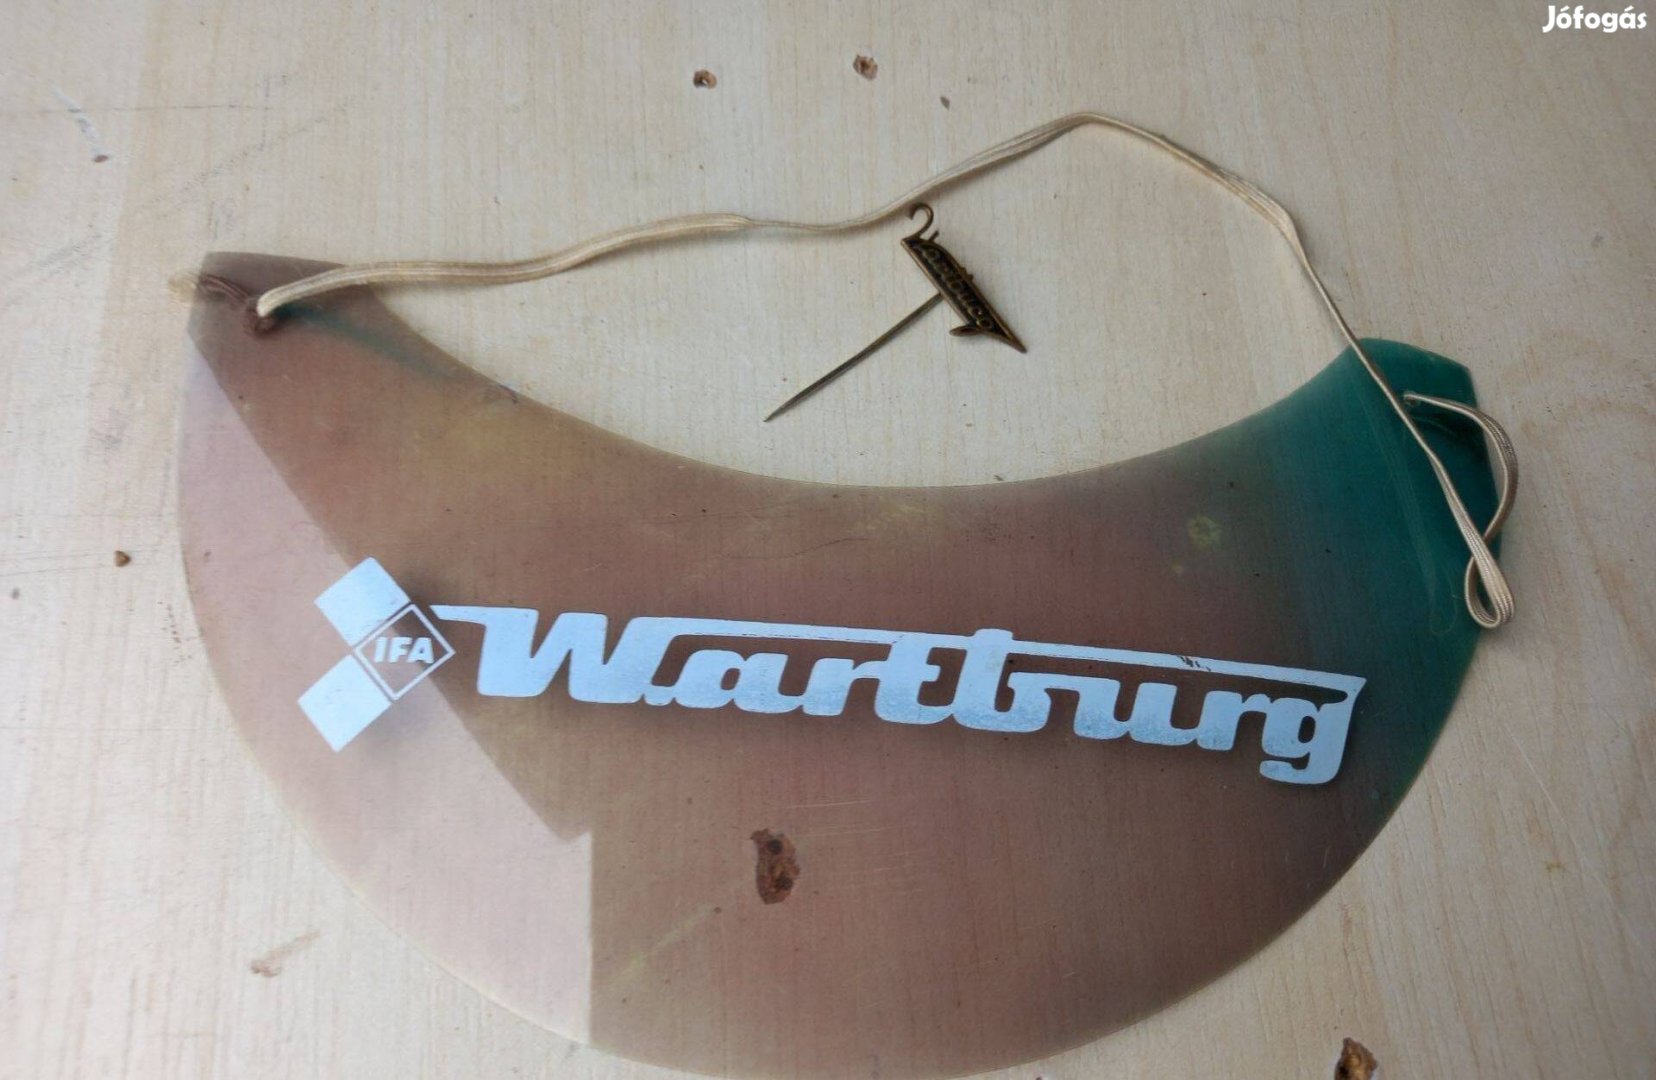 Wartburg napelenző+ kitűző régi